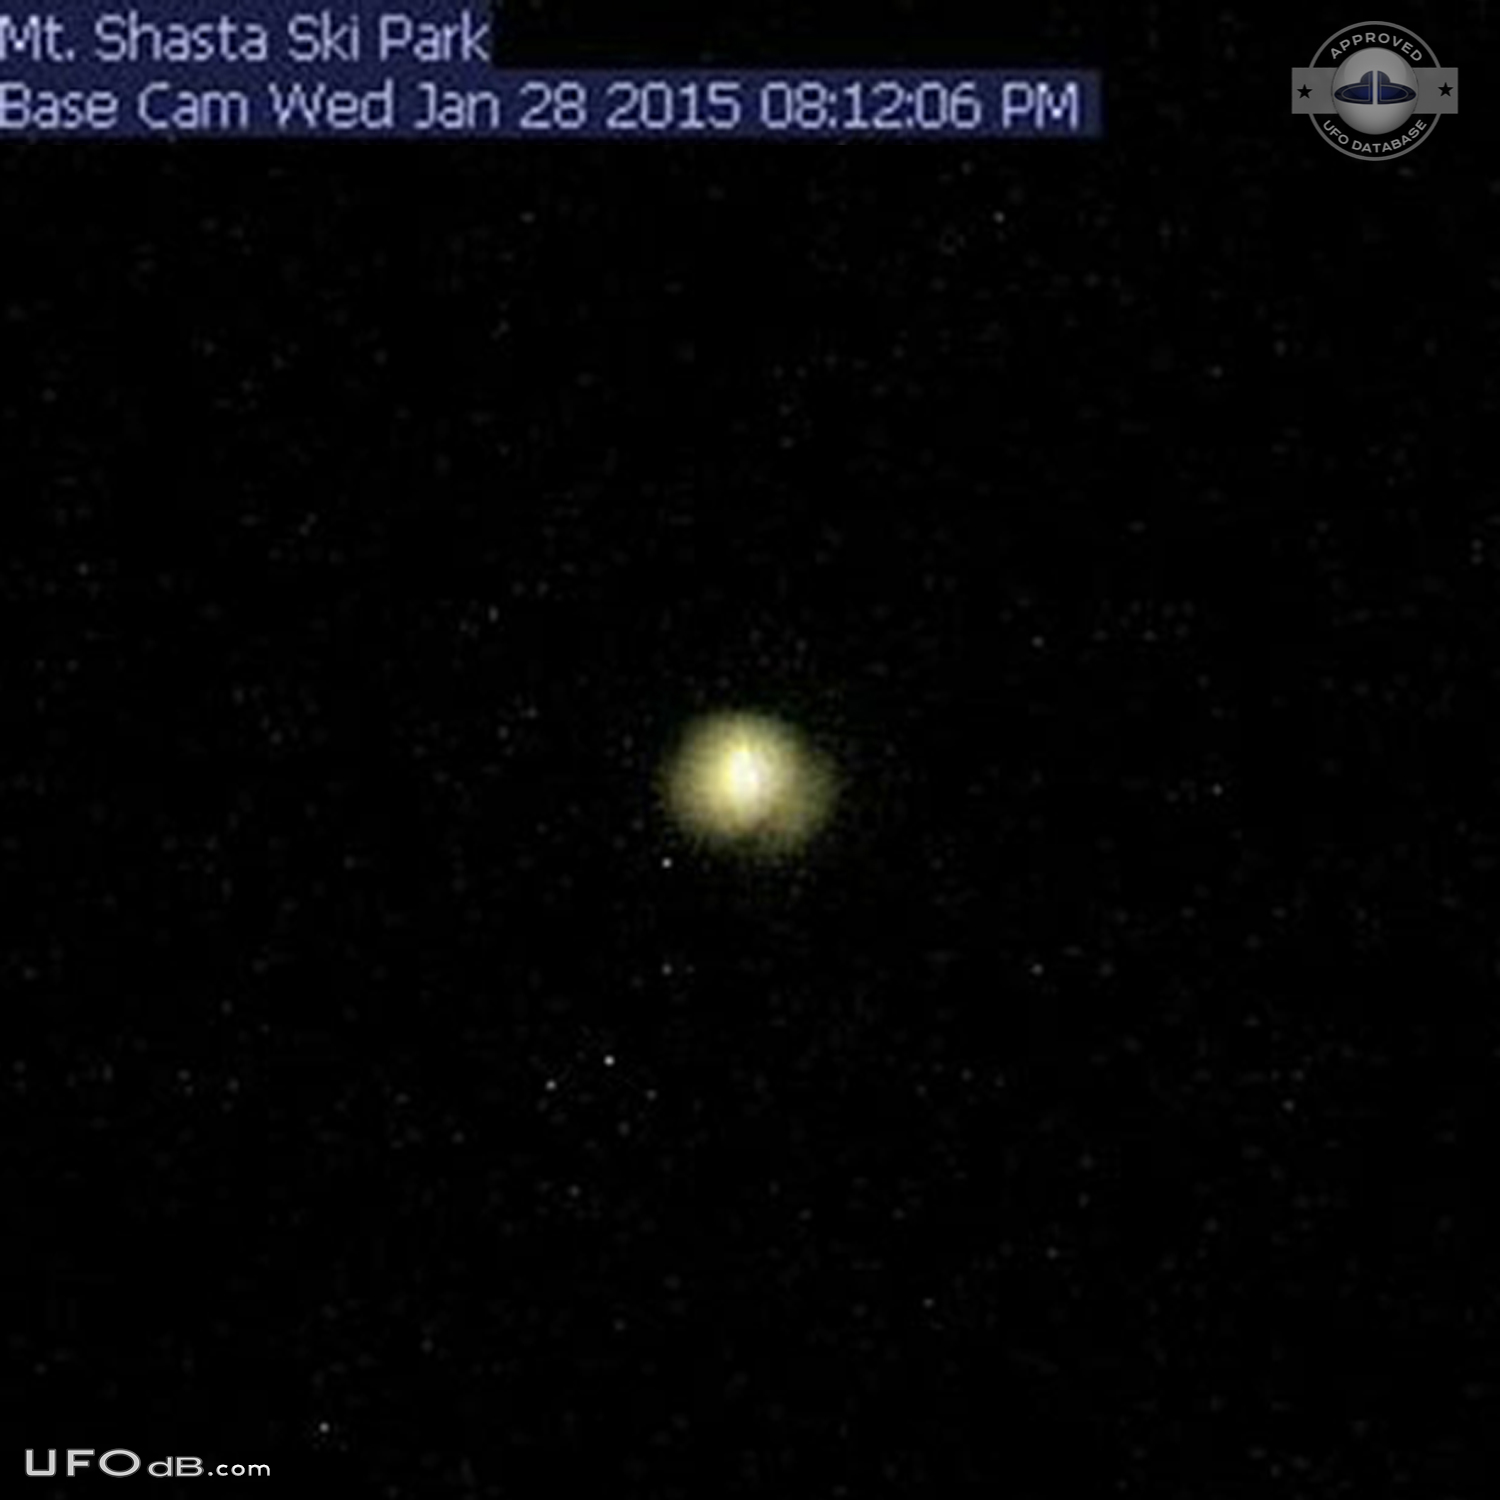 Ski cam of Mt Shasta captures a UFO orb in California USA 2015 UFO Picture #603-3